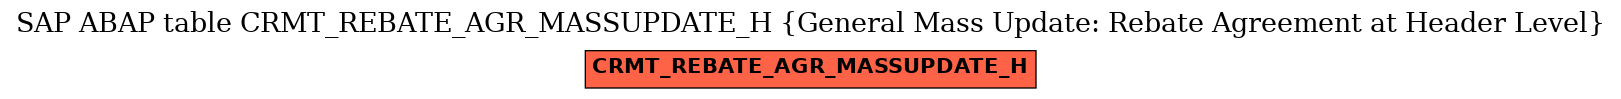 E-R Diagram for table CRMT_REBATE_AGR_MASSUPDATE_H (General Mass Update: Rebate Agreement at Header Level)